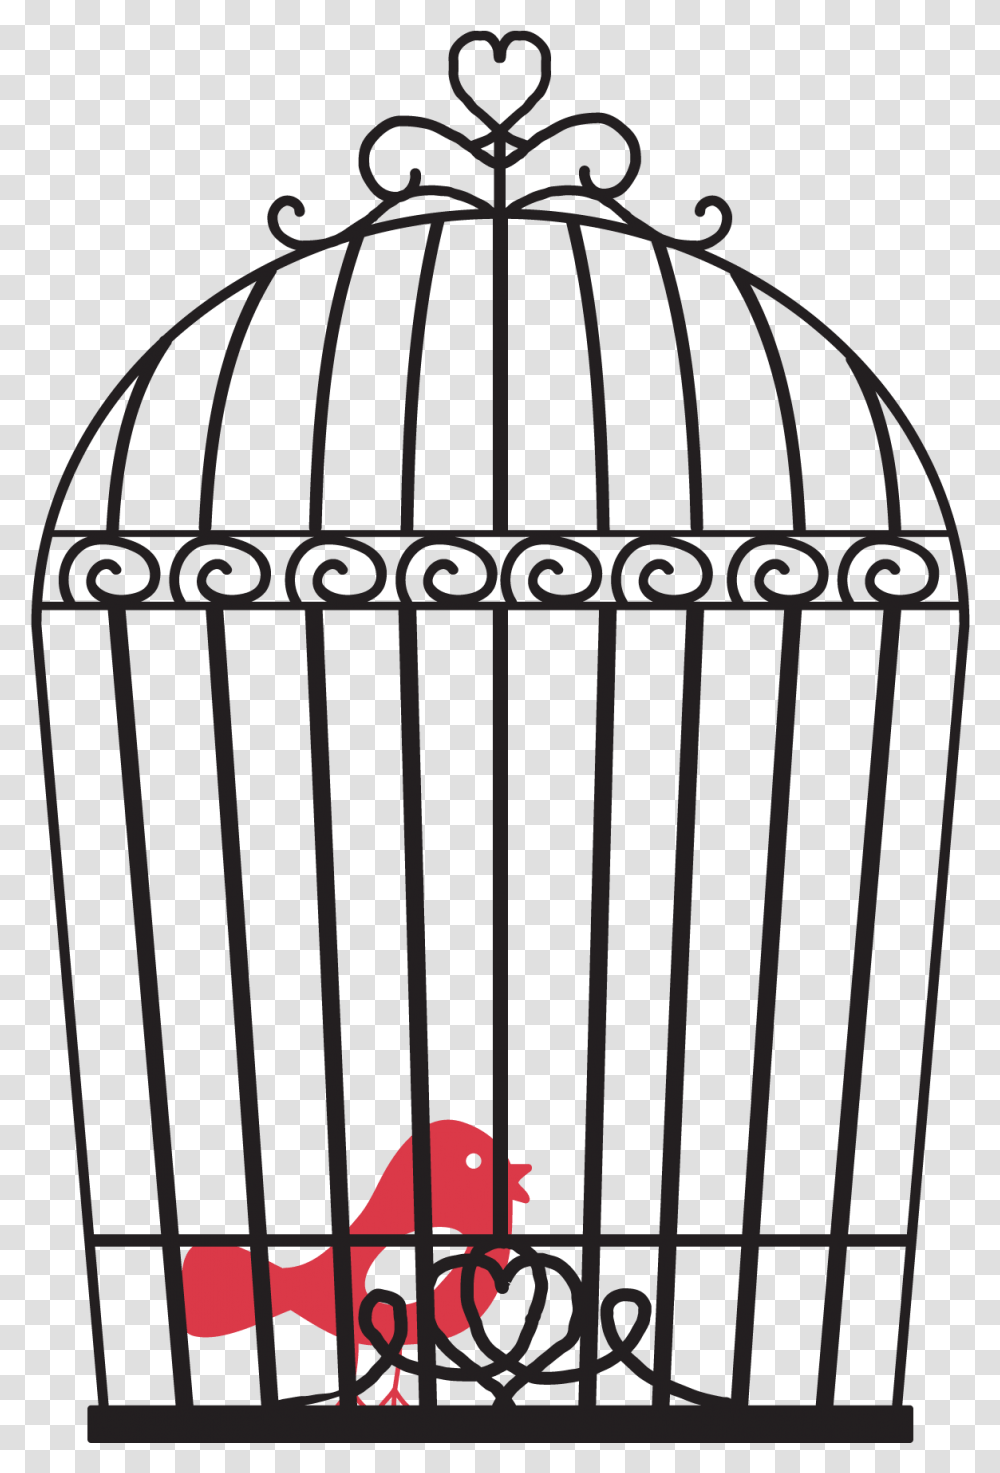 Download Cage Bird Image For Free Birdcage, Gate, Grille Transparent Png